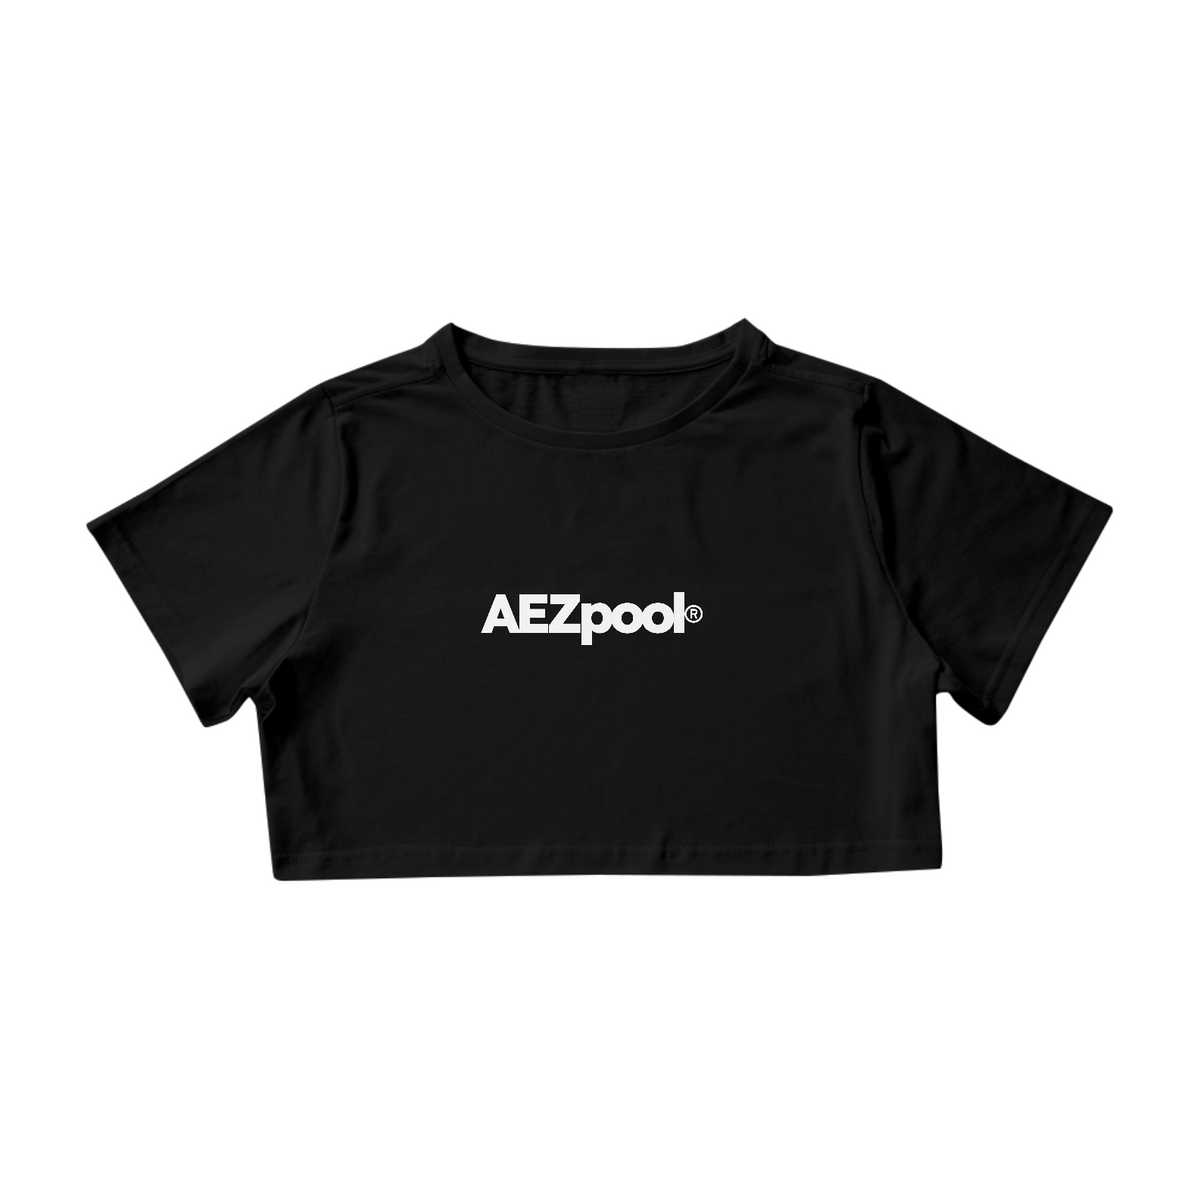 Nome do produto: Cropped - AEZpool® classic #b240418f2